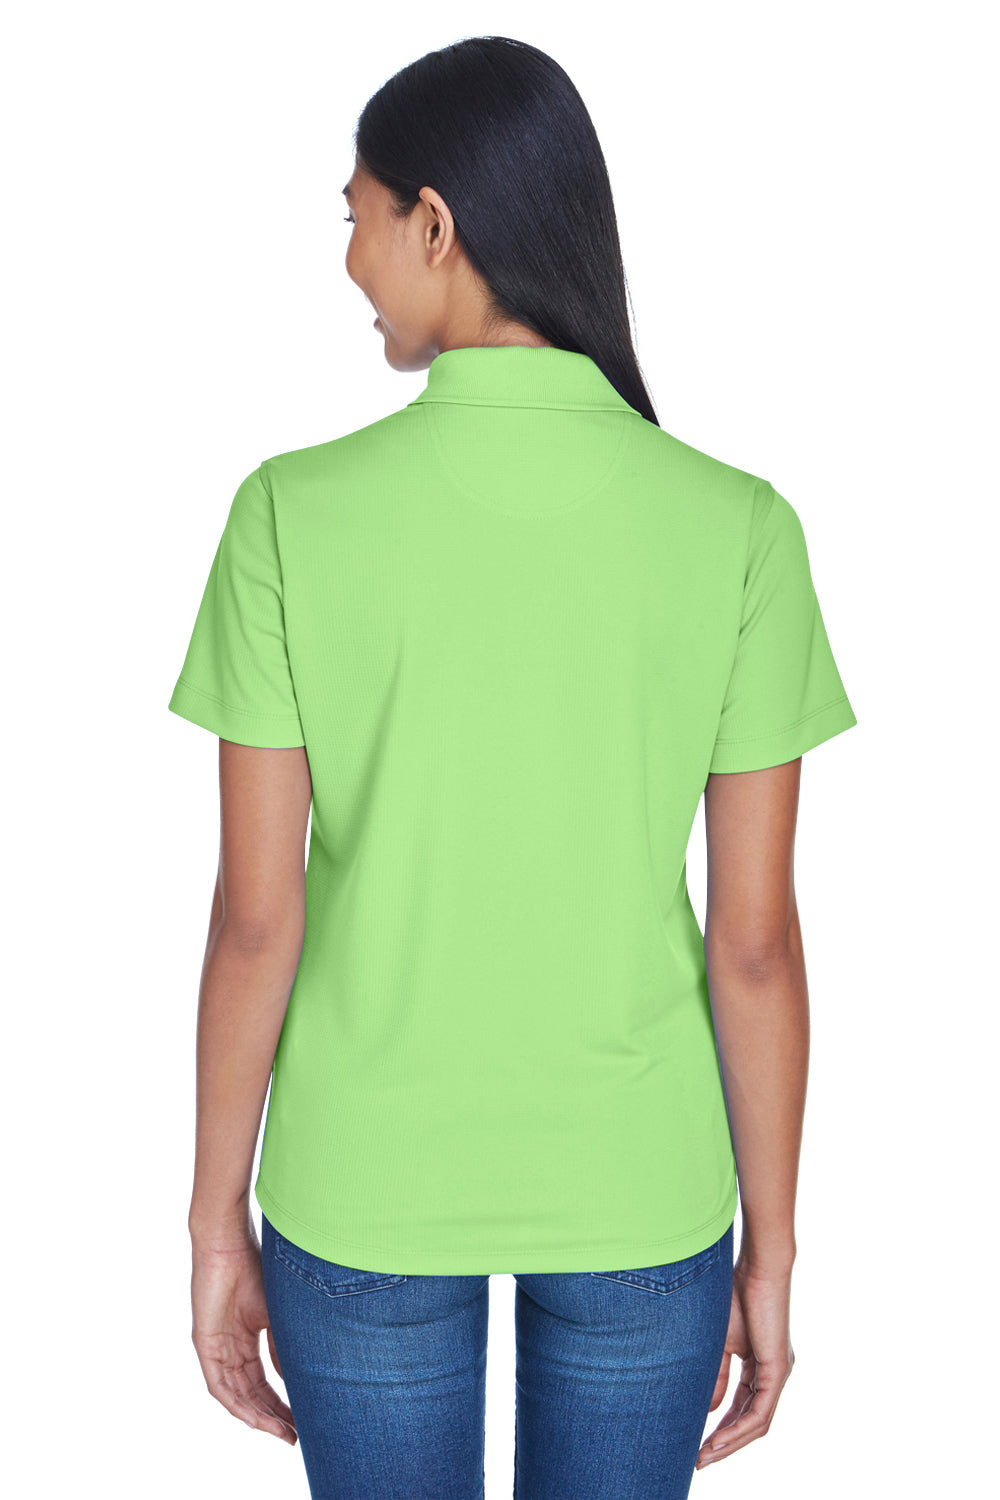 UltraClub 8445L Womens Cool & Dry Performance Moisture Wicking Short Sleeve Polo Shirt Light Green Back